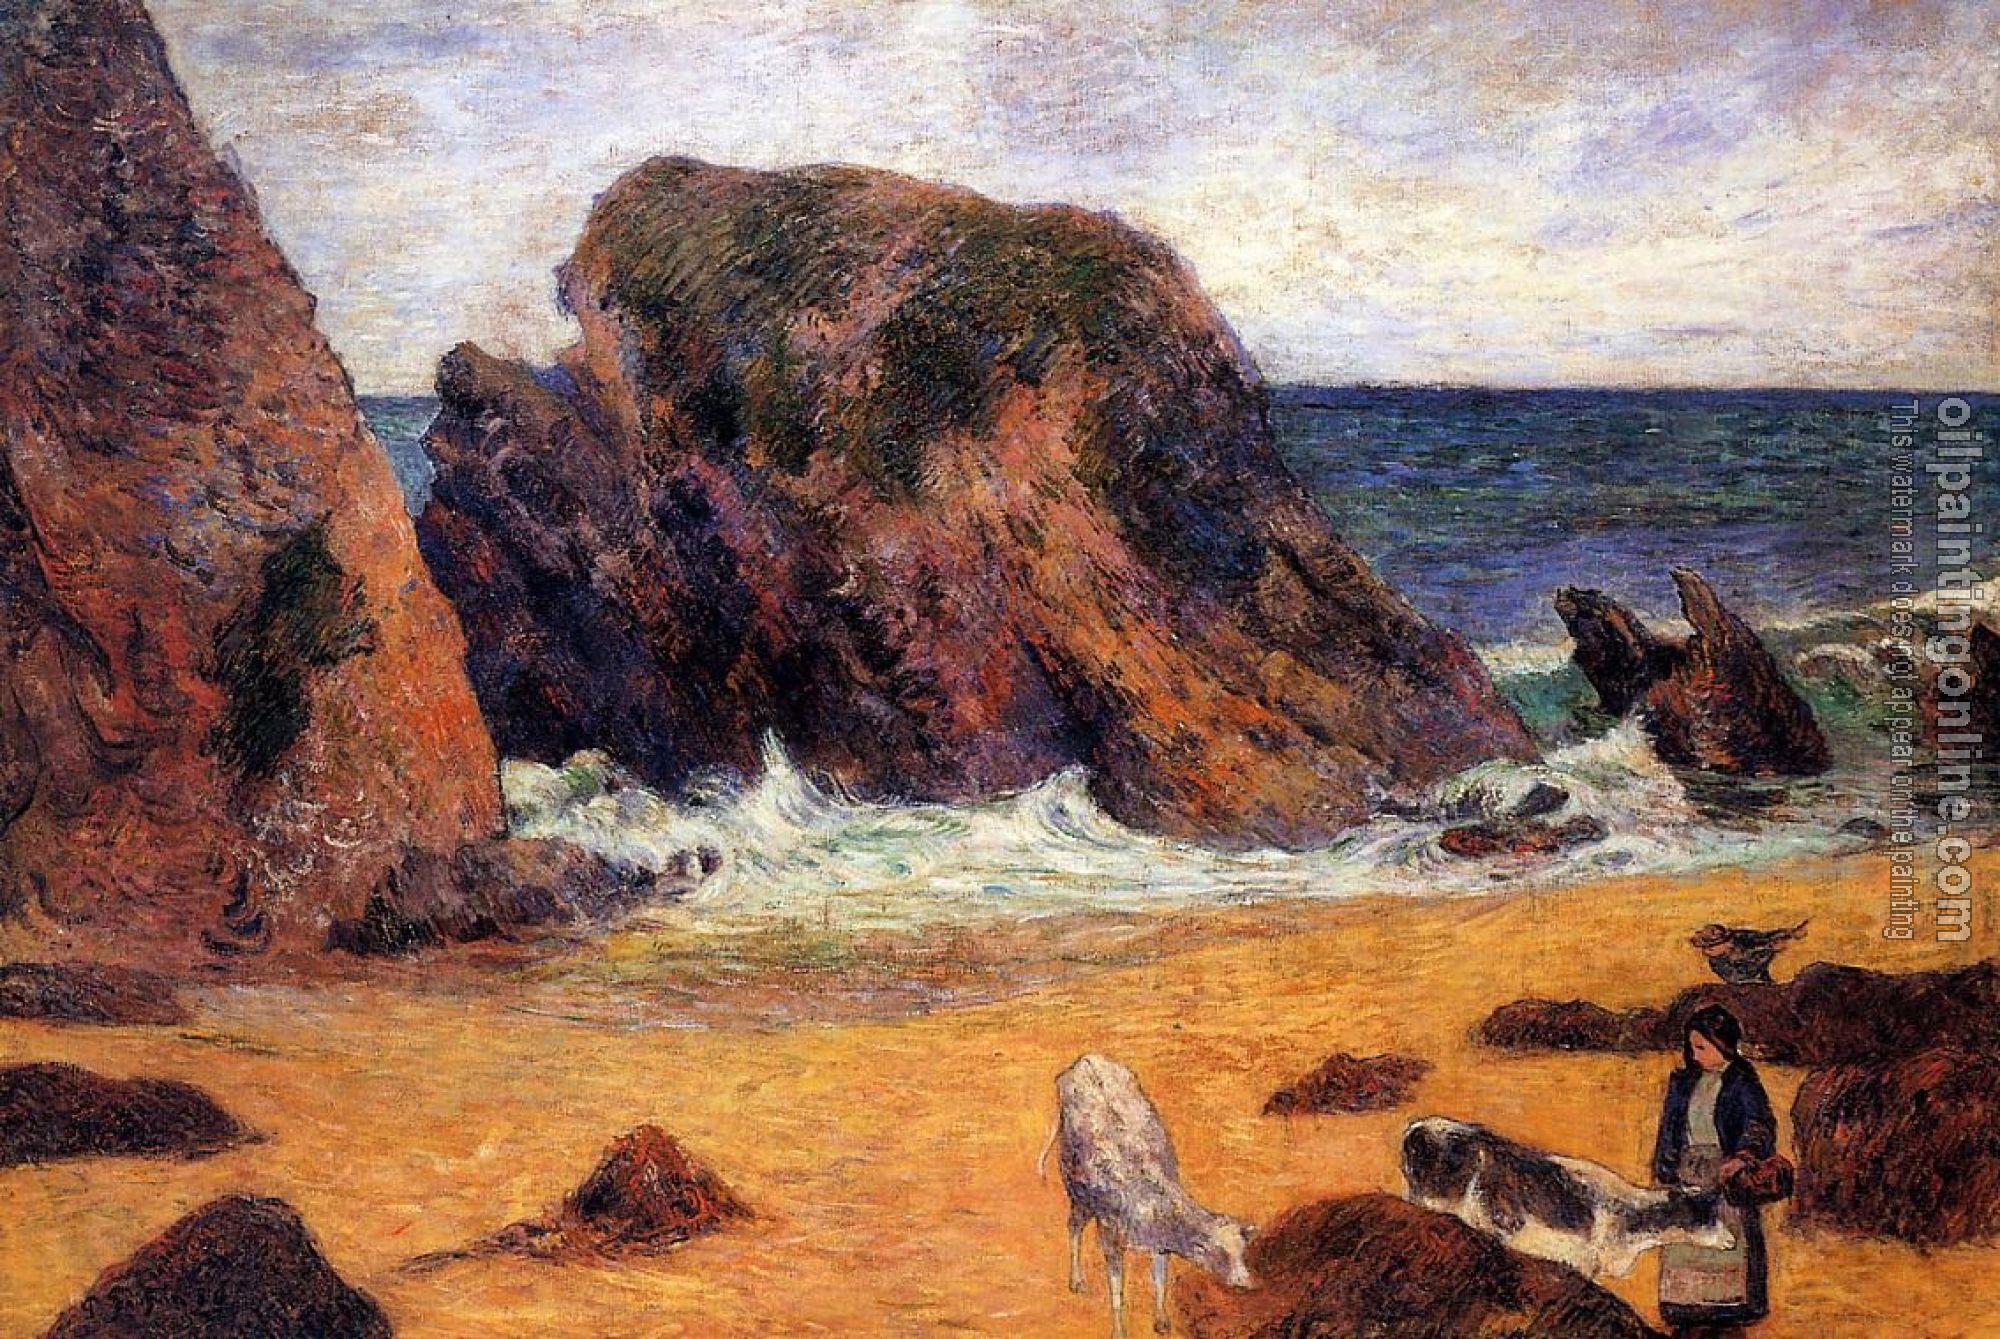 Gauguin, Paul - Cows by the Sea